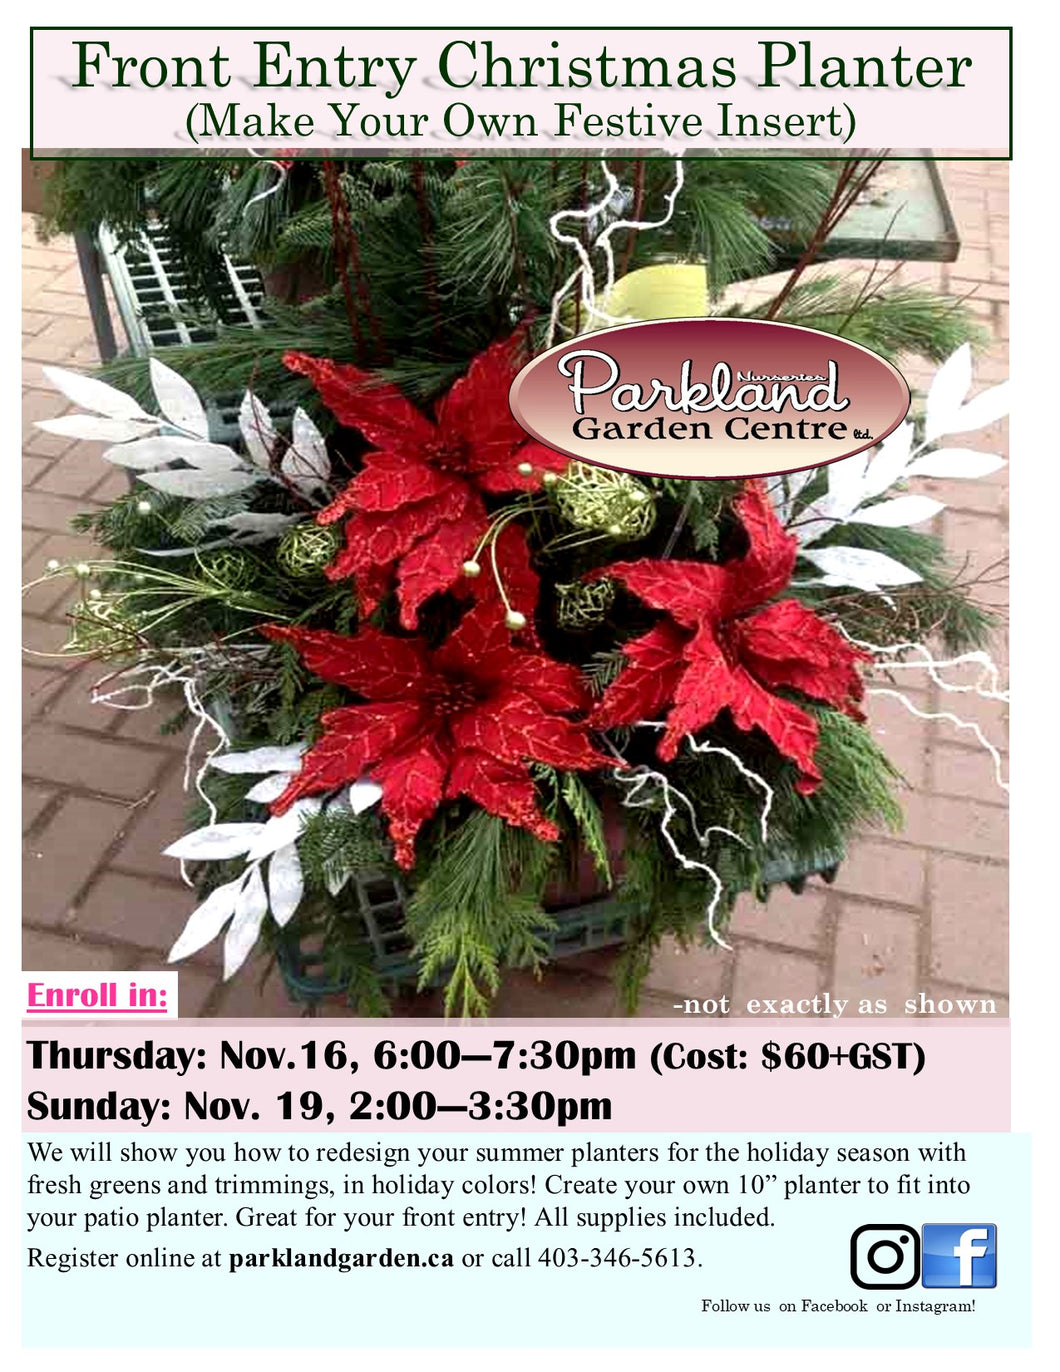 Front Entry Christmas Planter- Make Your Own Festive Insert  Sunday Nov 19th/23 2:00-3:30pm